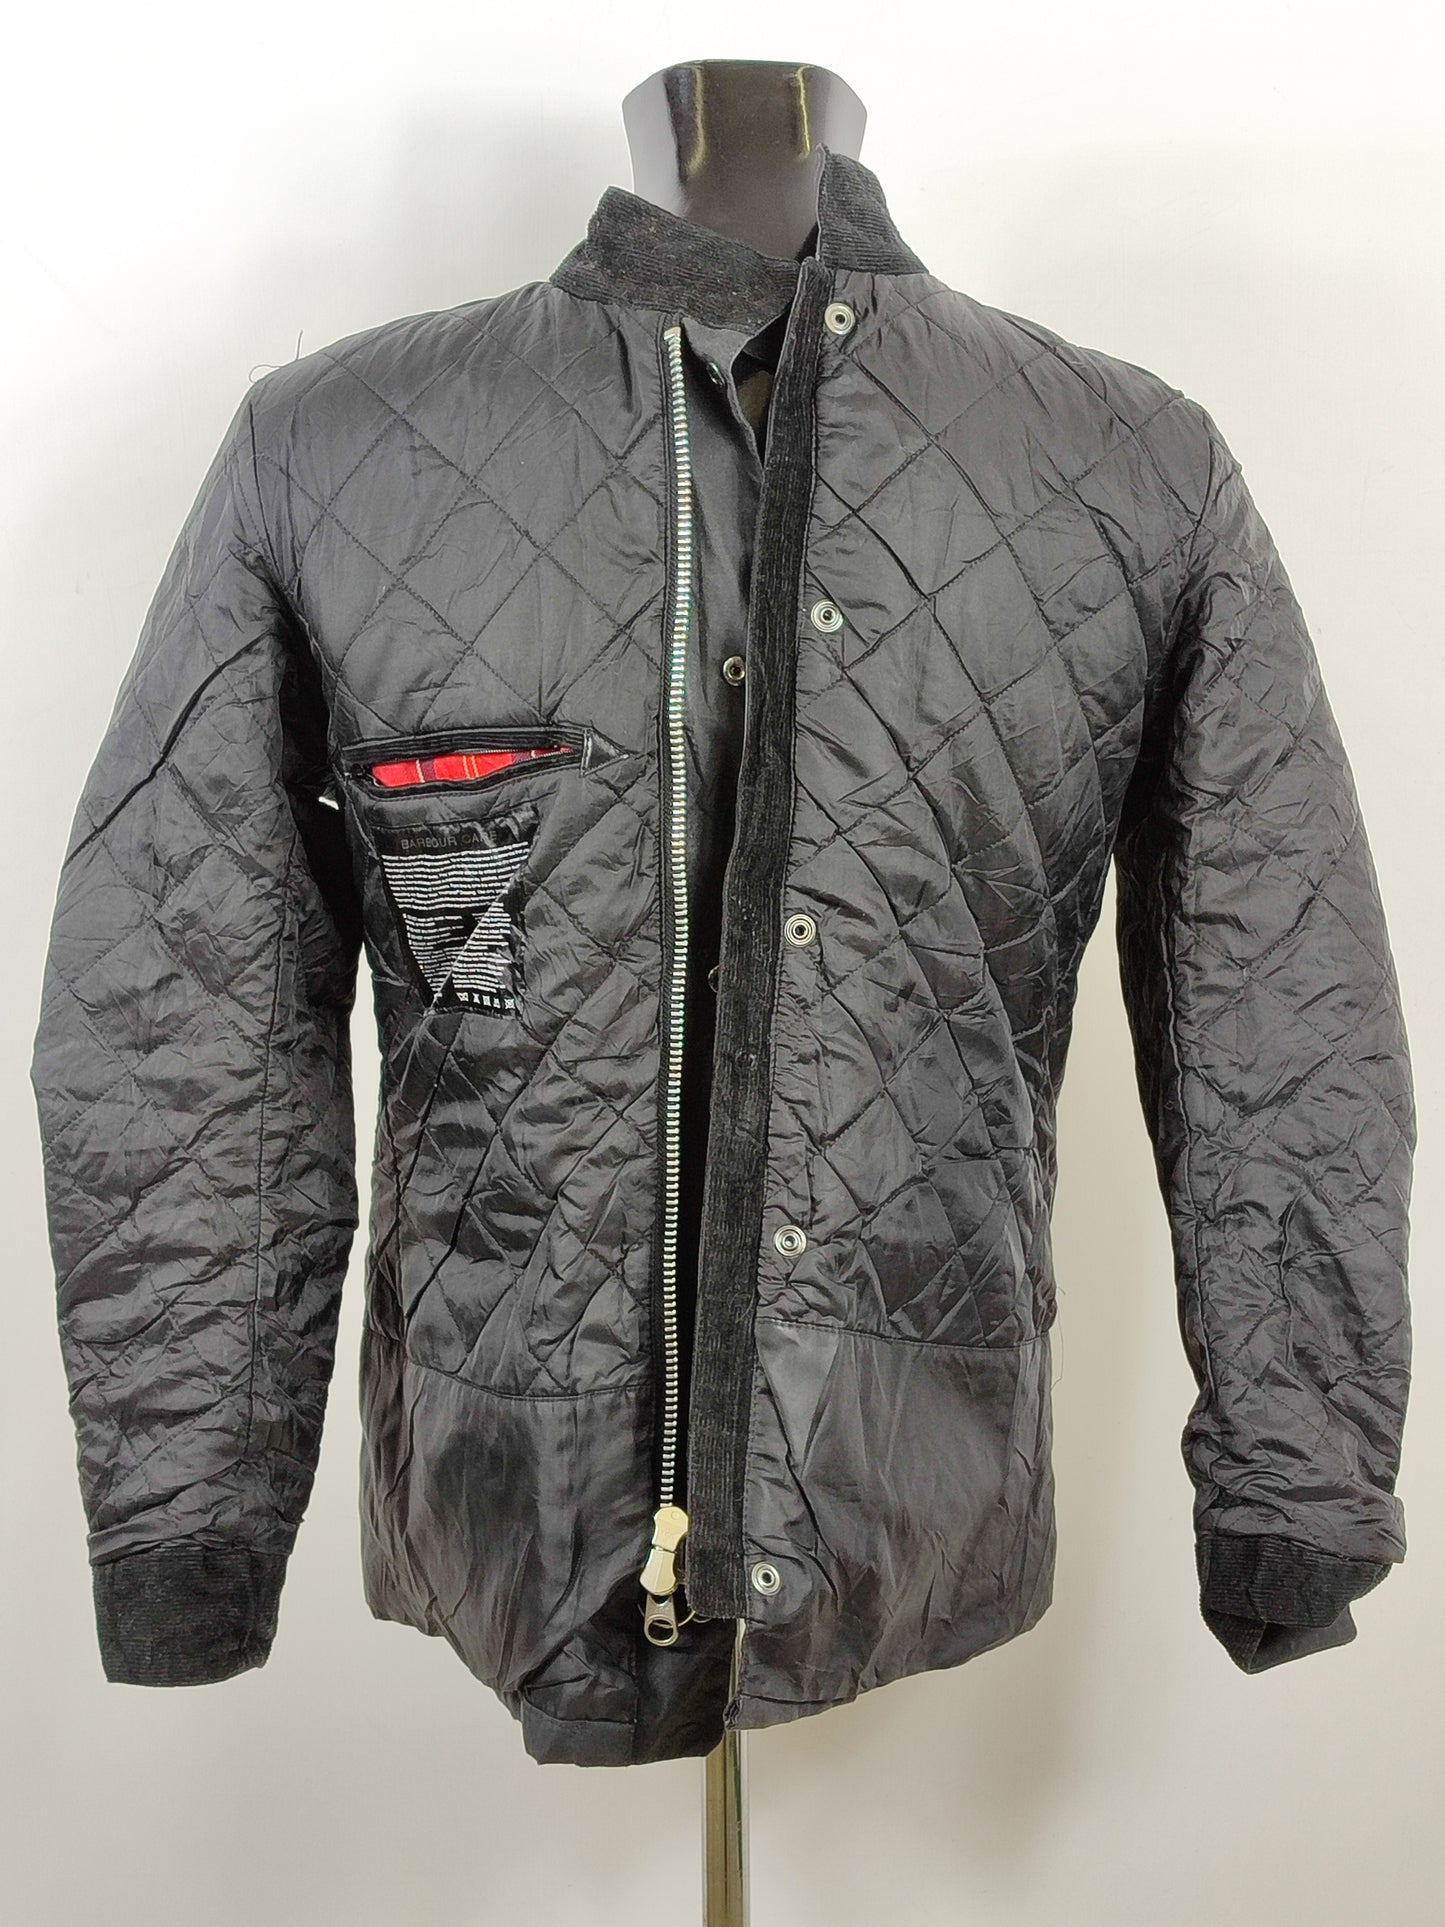 Giacca Barbour International Uomo Duke Nero Medium - Man Black Duke wax Jacket Size M